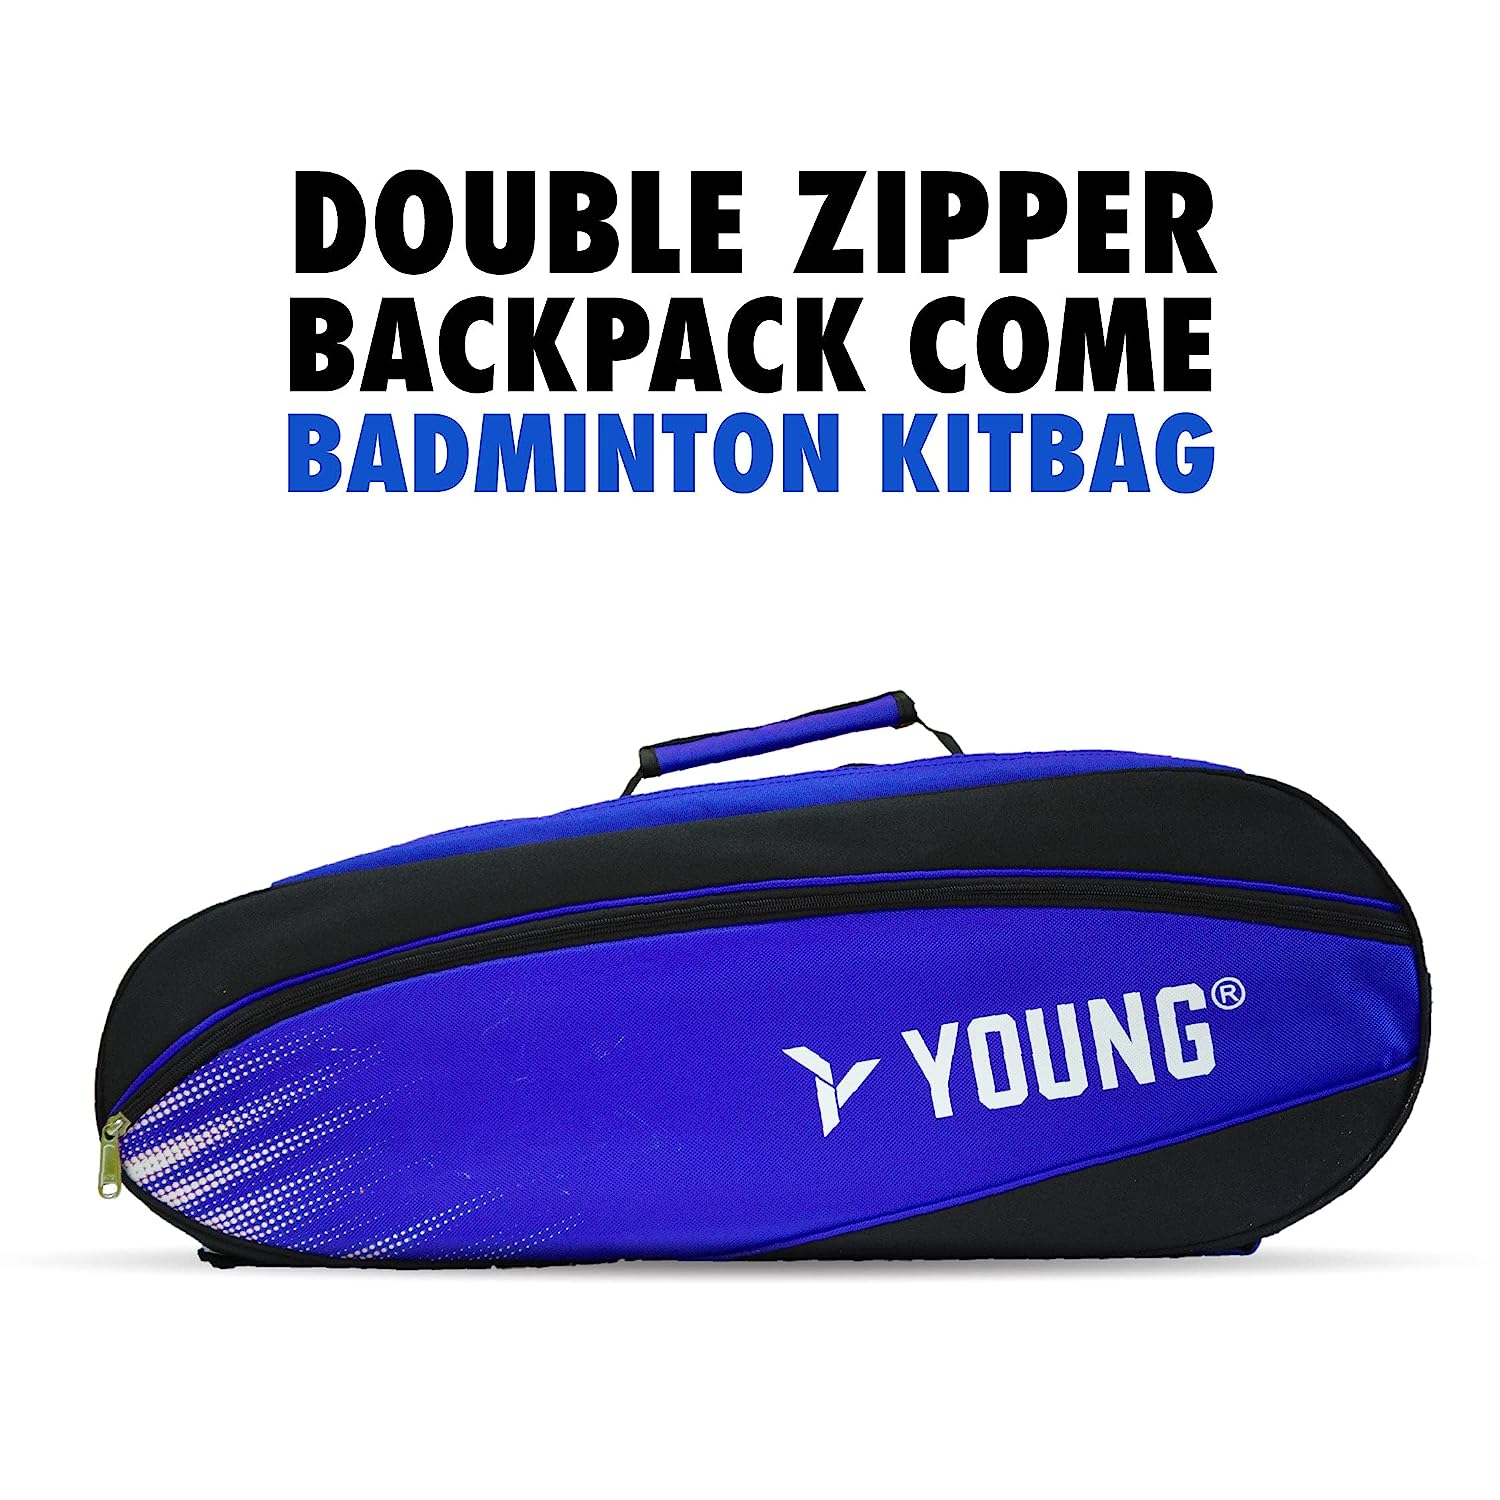 BADMINTON KIT BAG YOUNG GTR